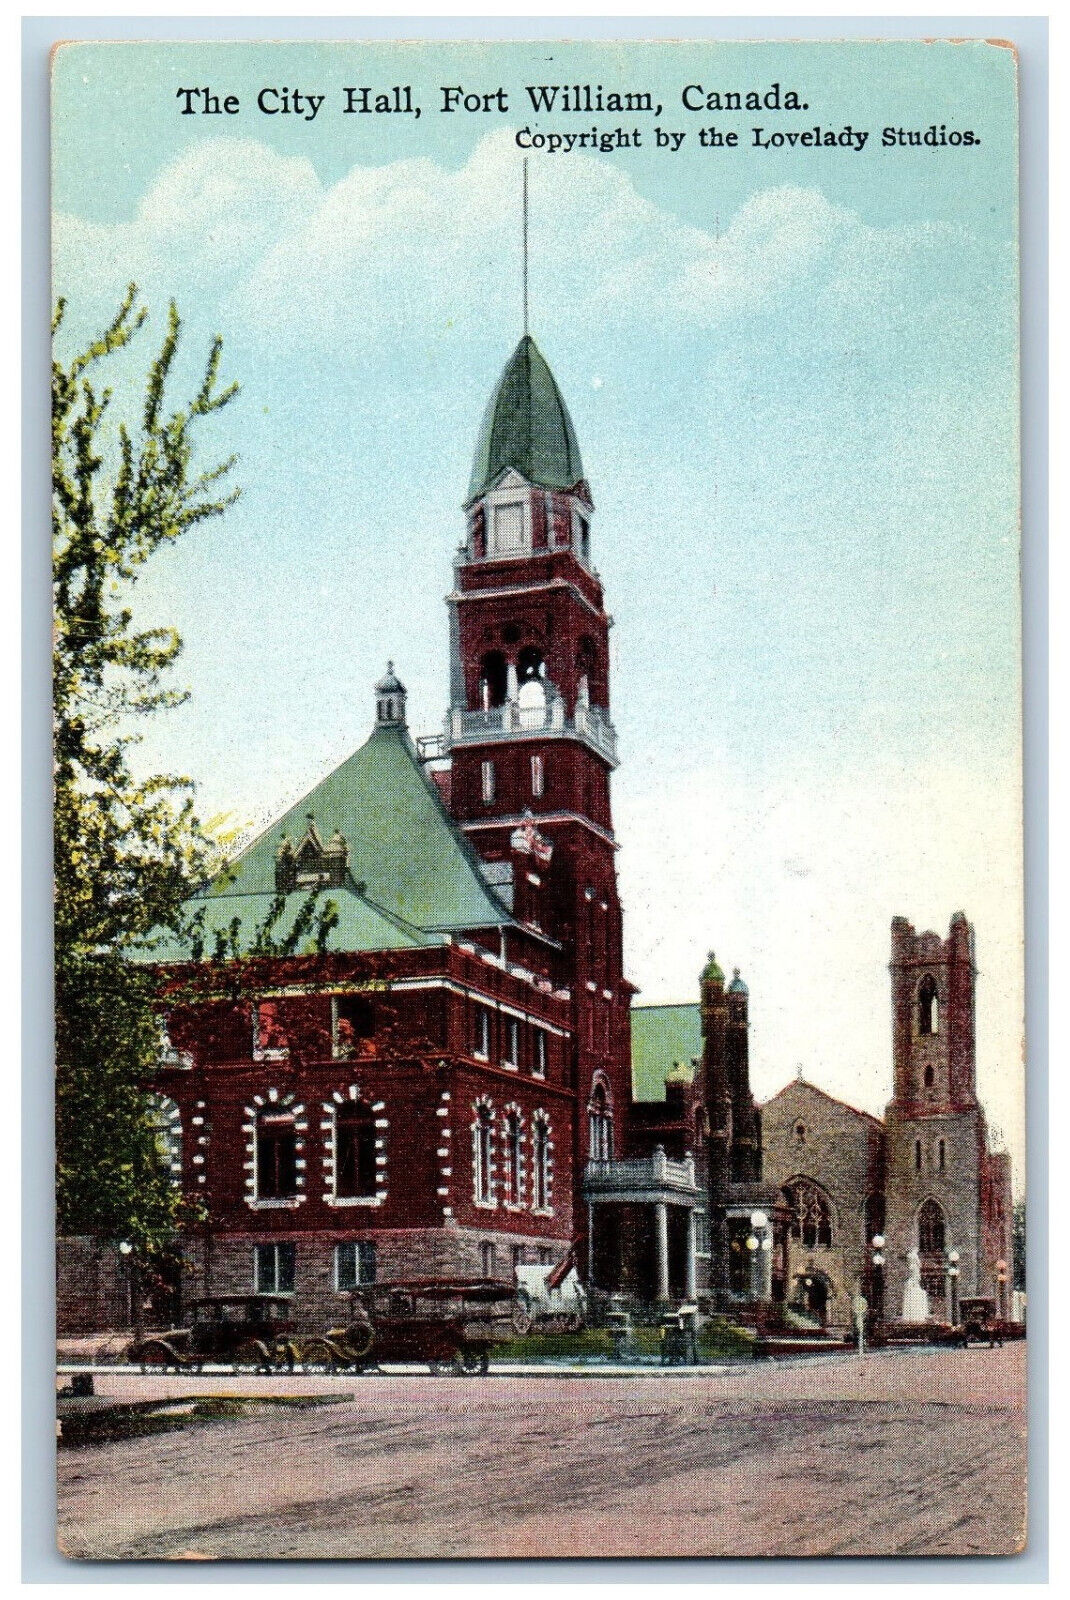 Fort William Ontario Canada Postcard The City Hall Building 1949 Vintage